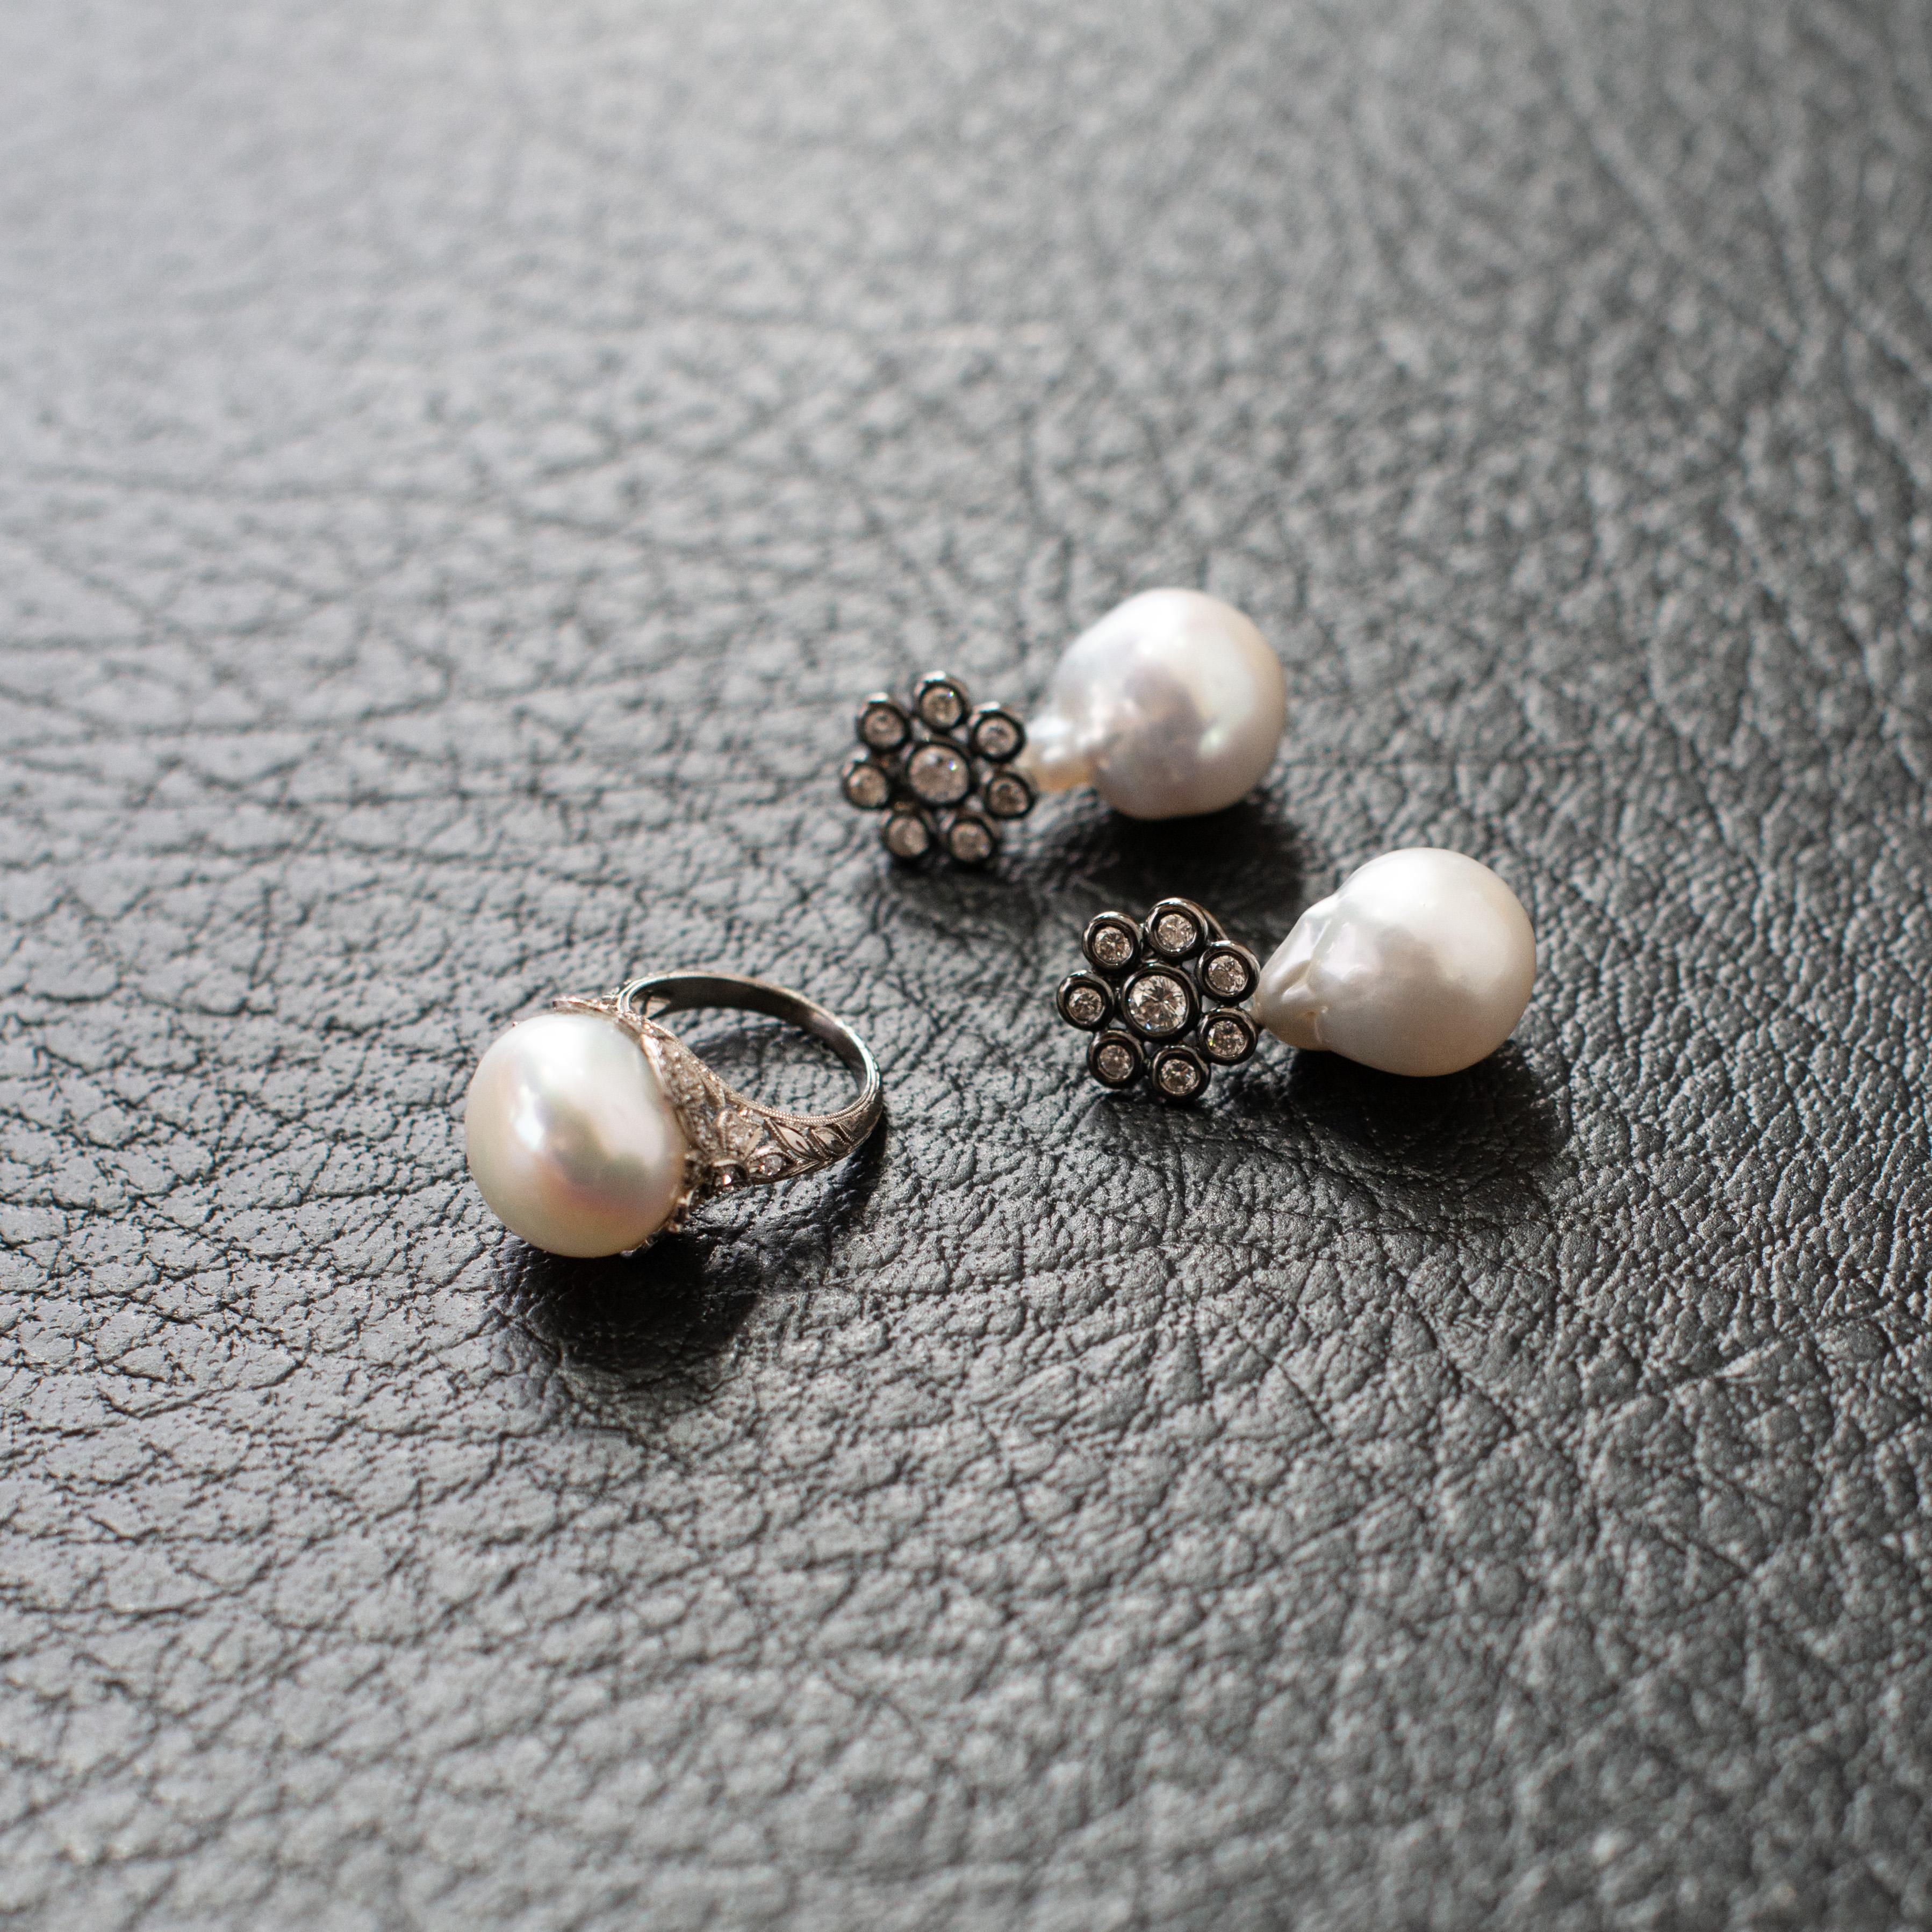 Round Cut Faye Kim 18 Karat Gold Black Rhodium Diamond Earrings with South Sea Pearl Drops